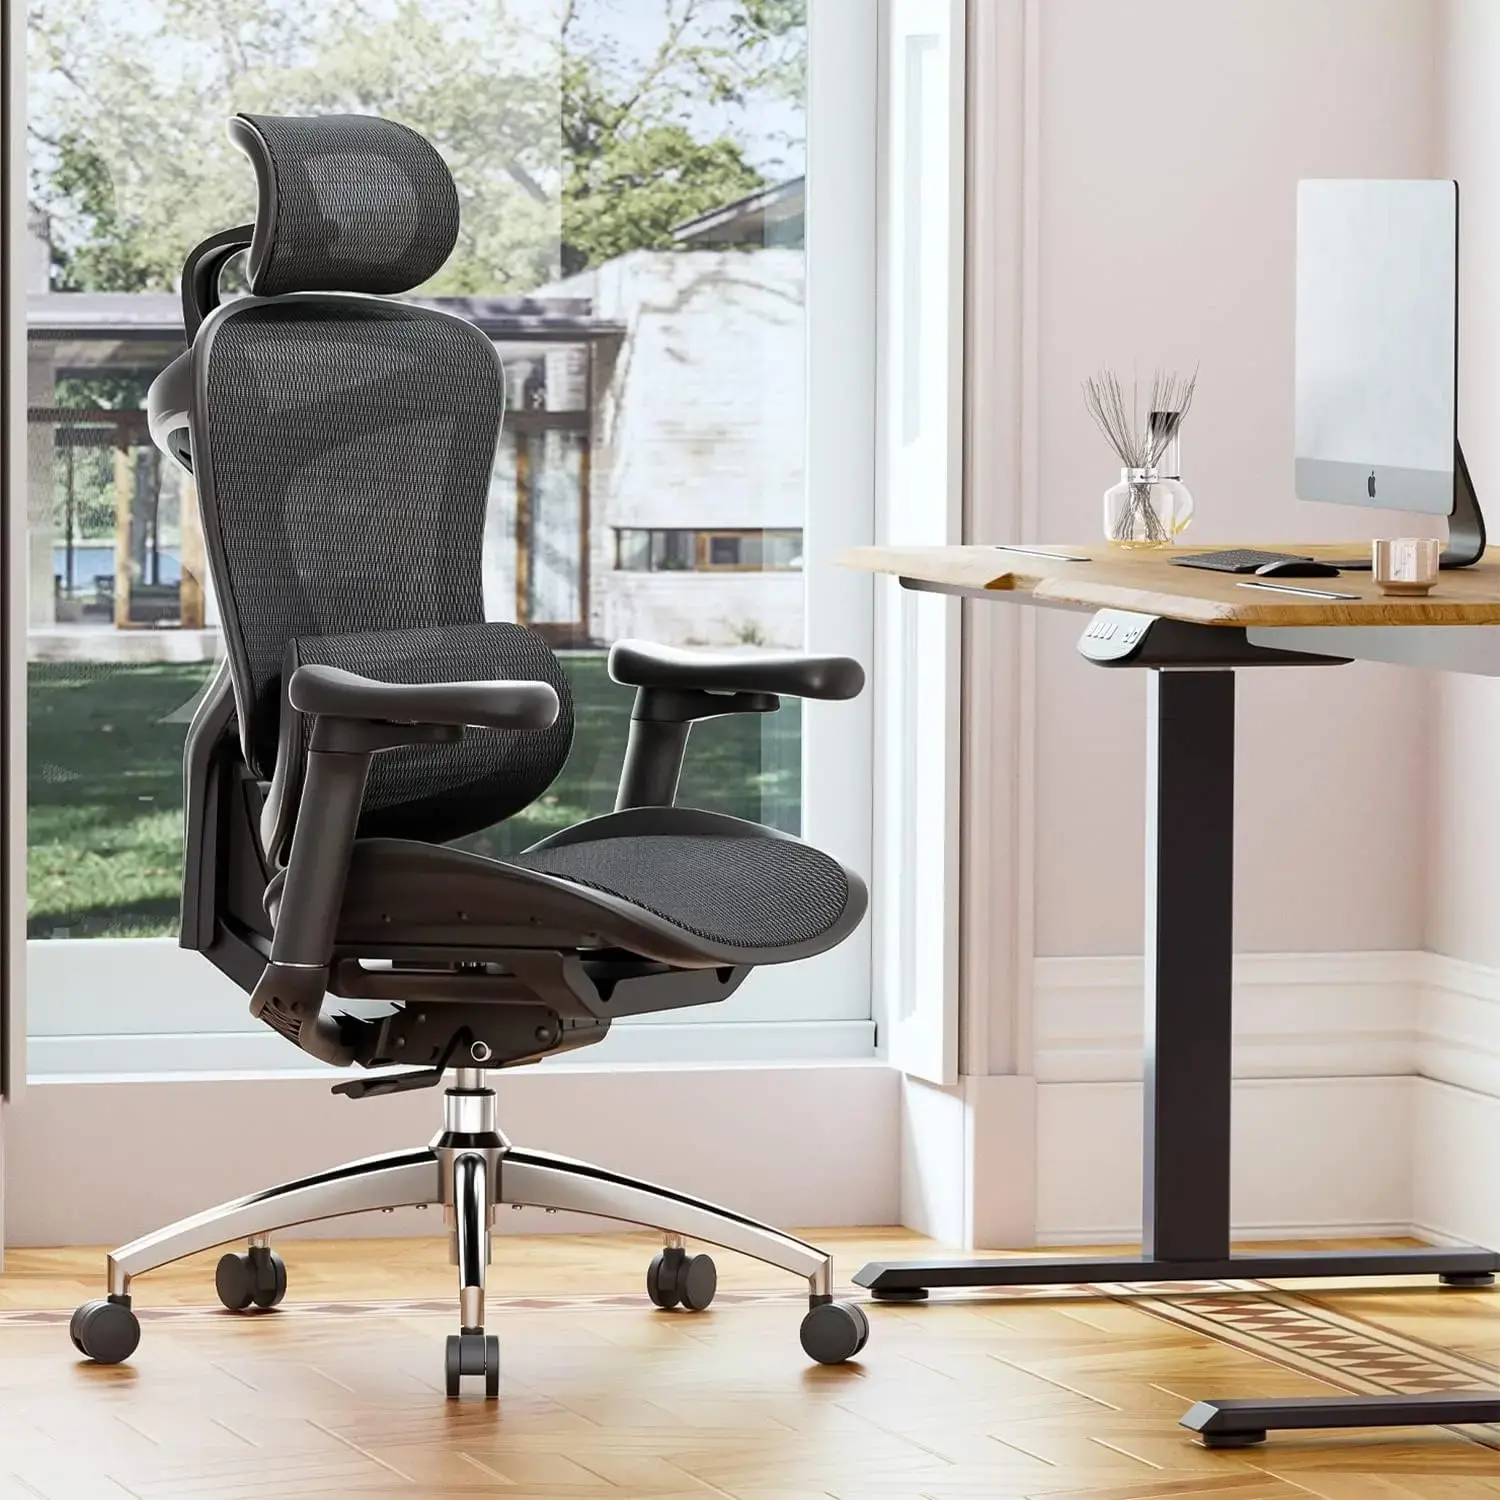 Blogduwebdesign idees cadeaux web designer chaise bureau ergonomique